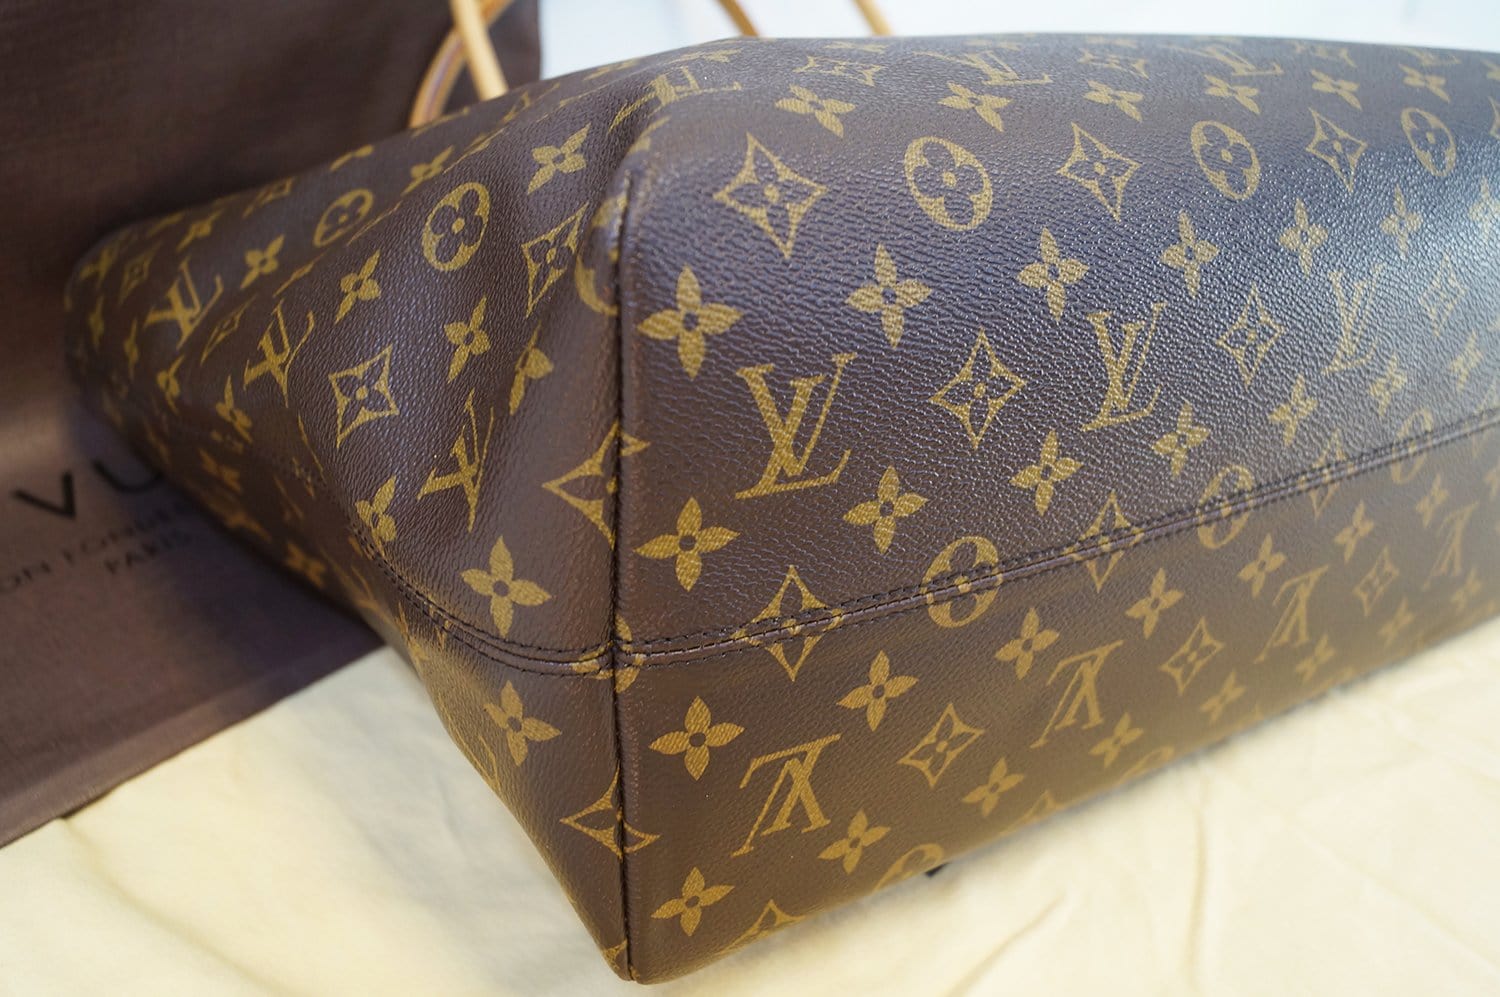 Louis Vuitton Louis Vuitton Raspail MM Monogram Canvas Large Tote Bag